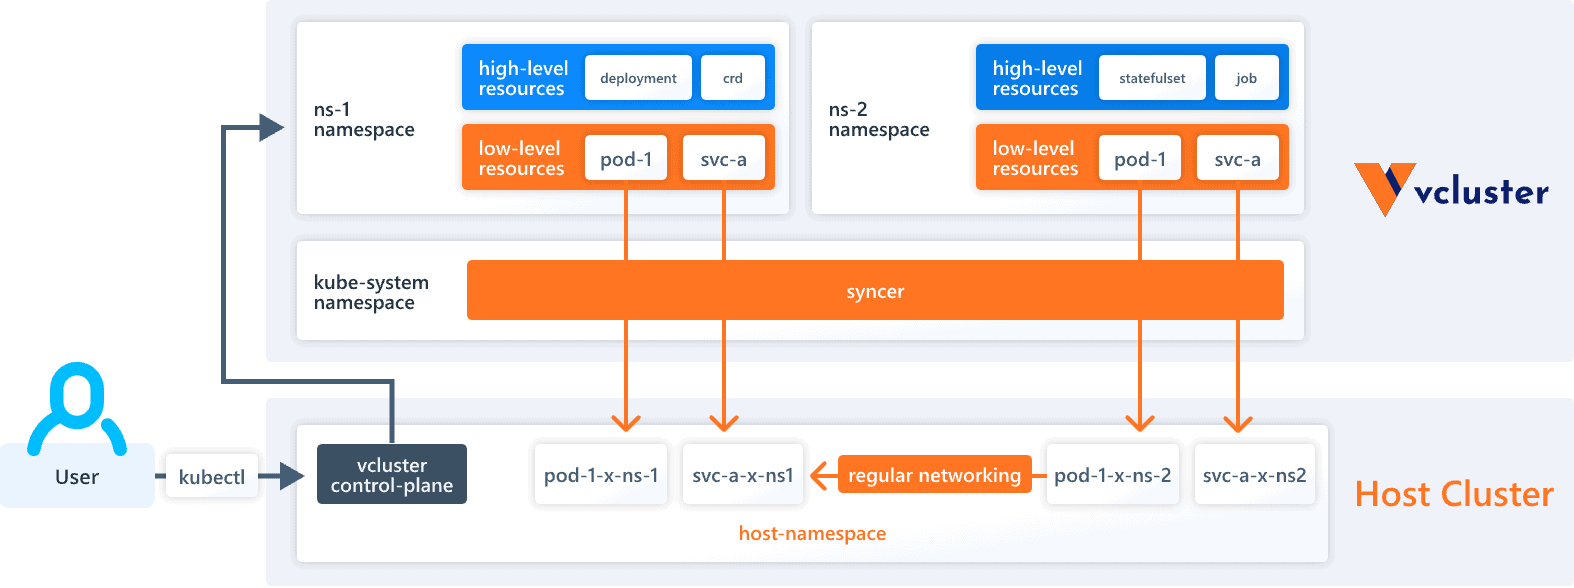 Diagram flow showing user to Host Cluster in vcluster